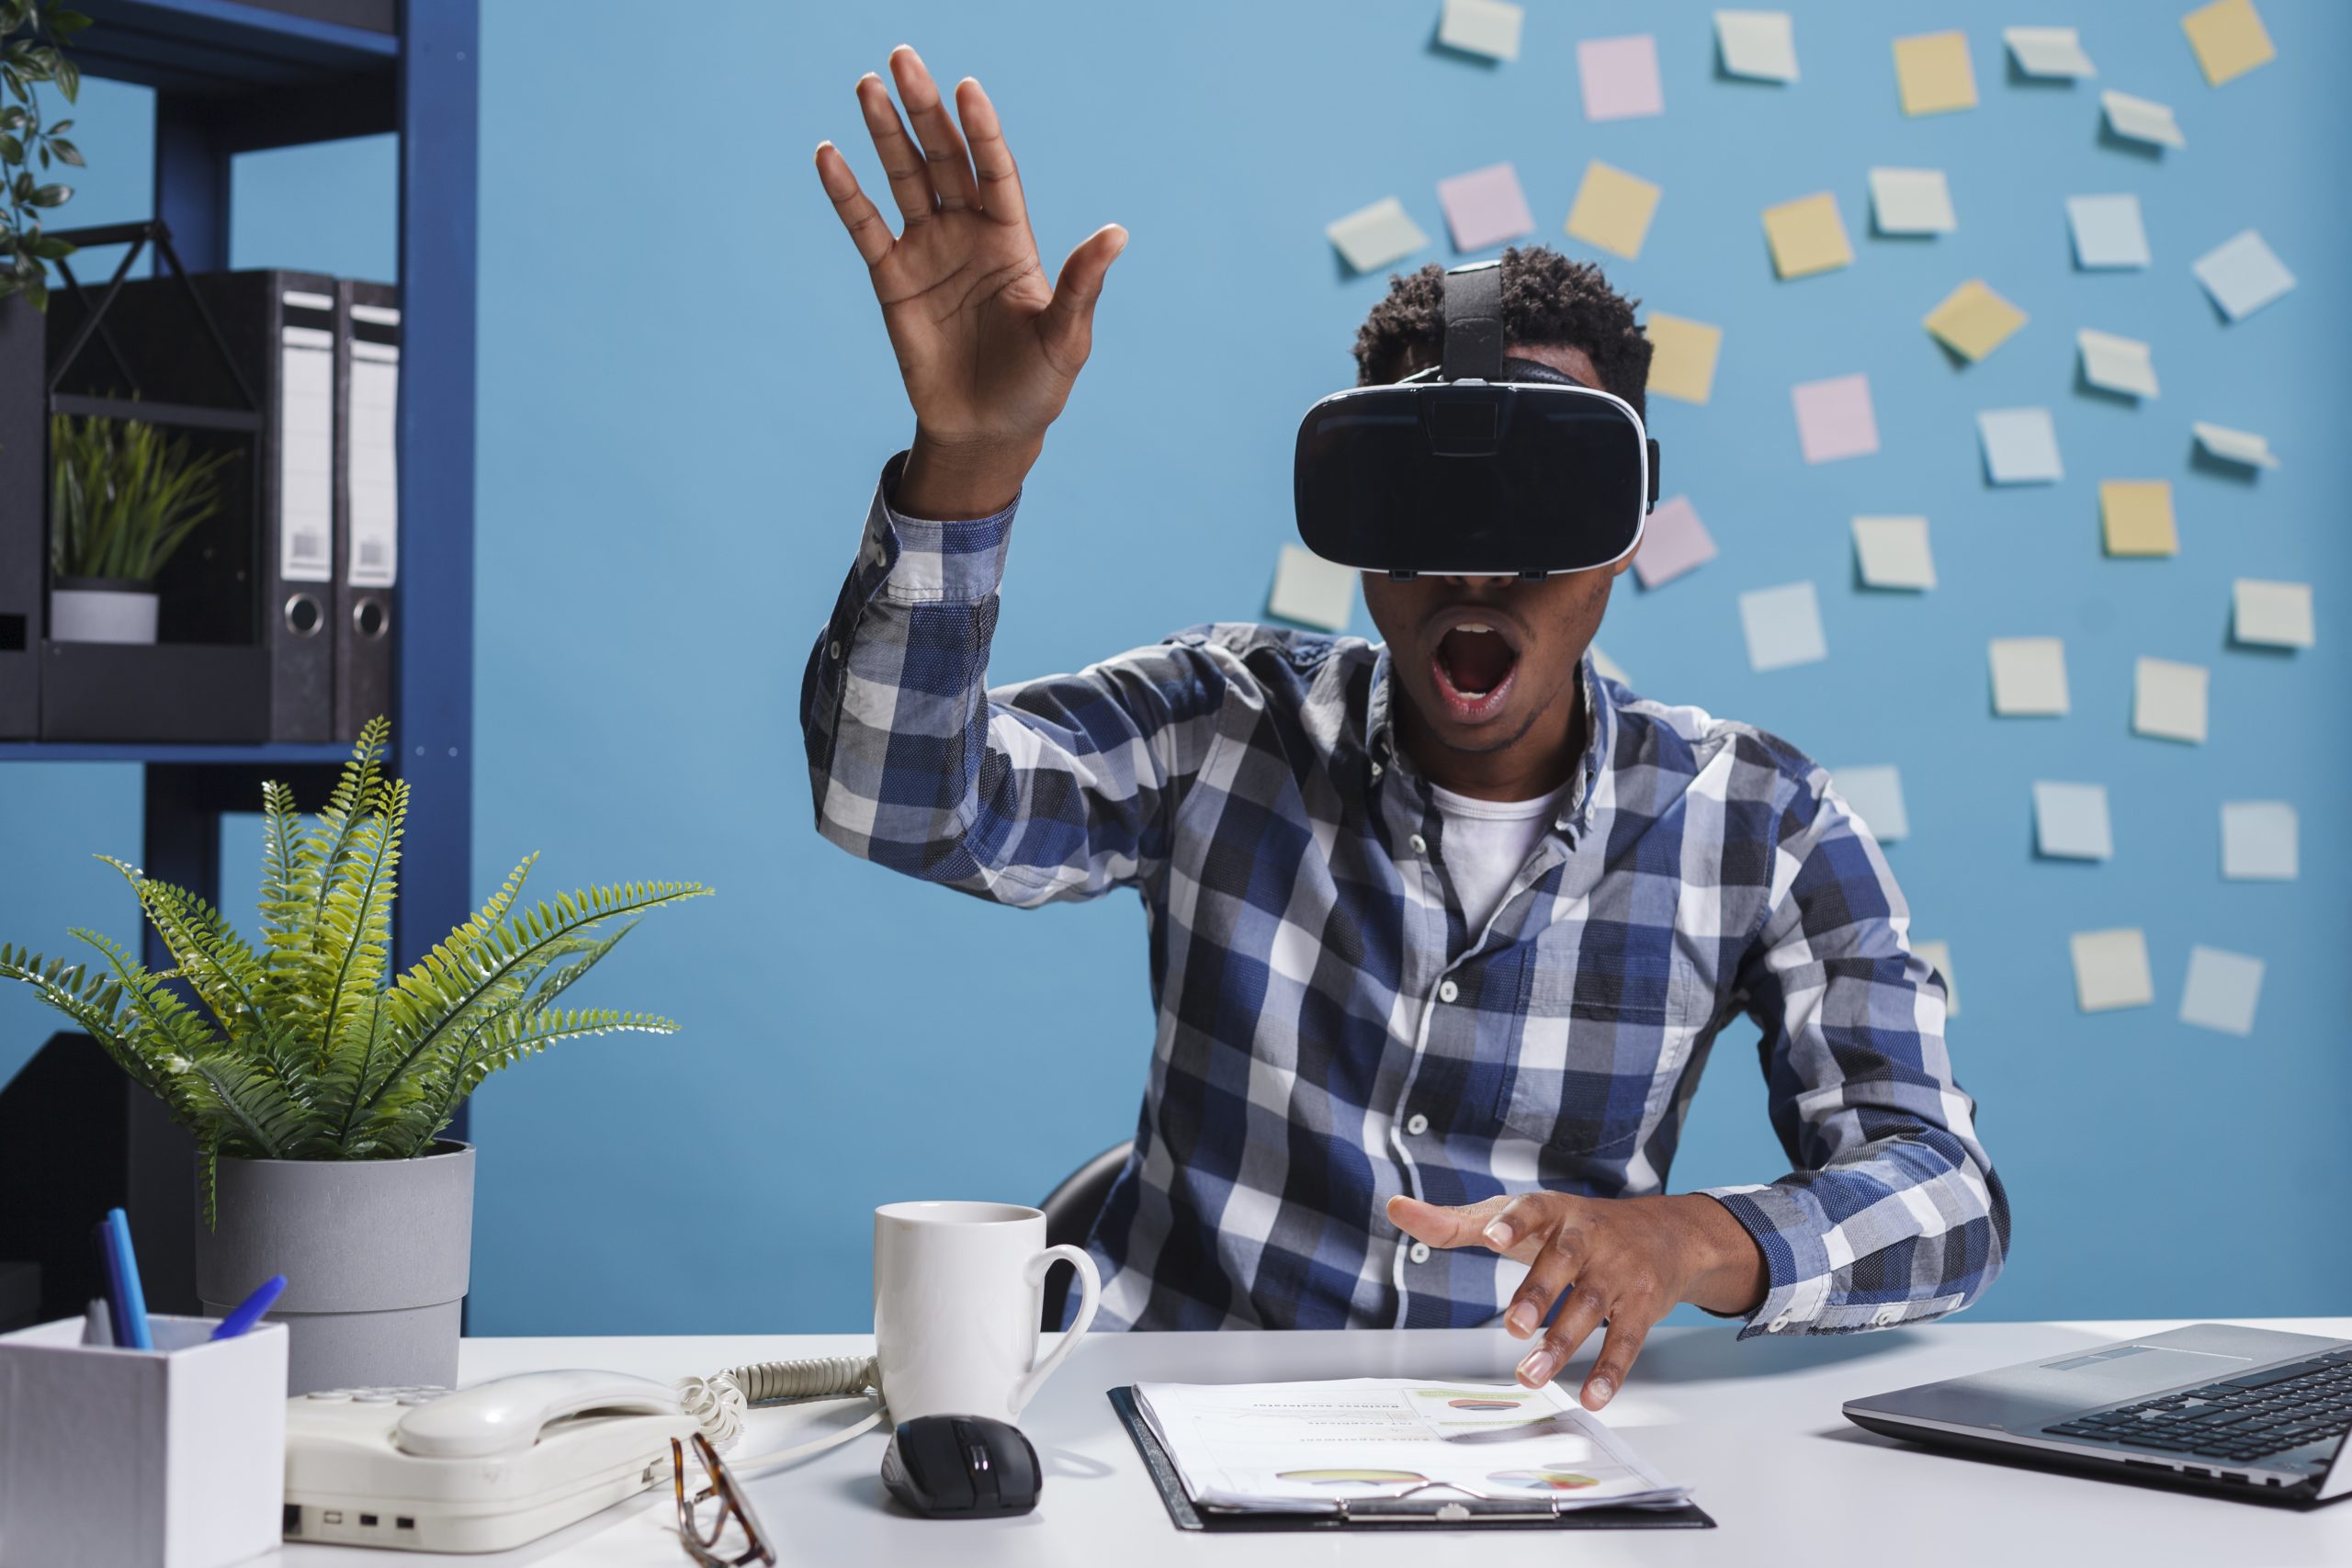 4 benefits of using VR for soft skills training